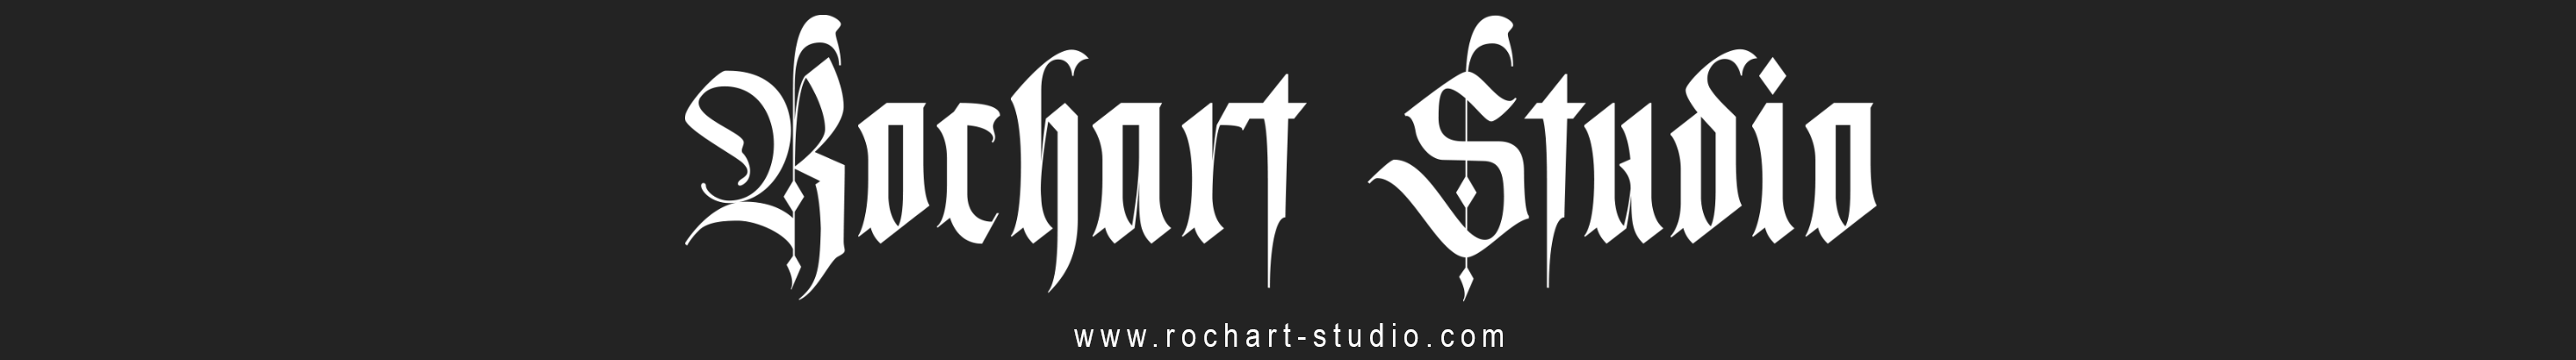 Banner de perfil de Rochart Project